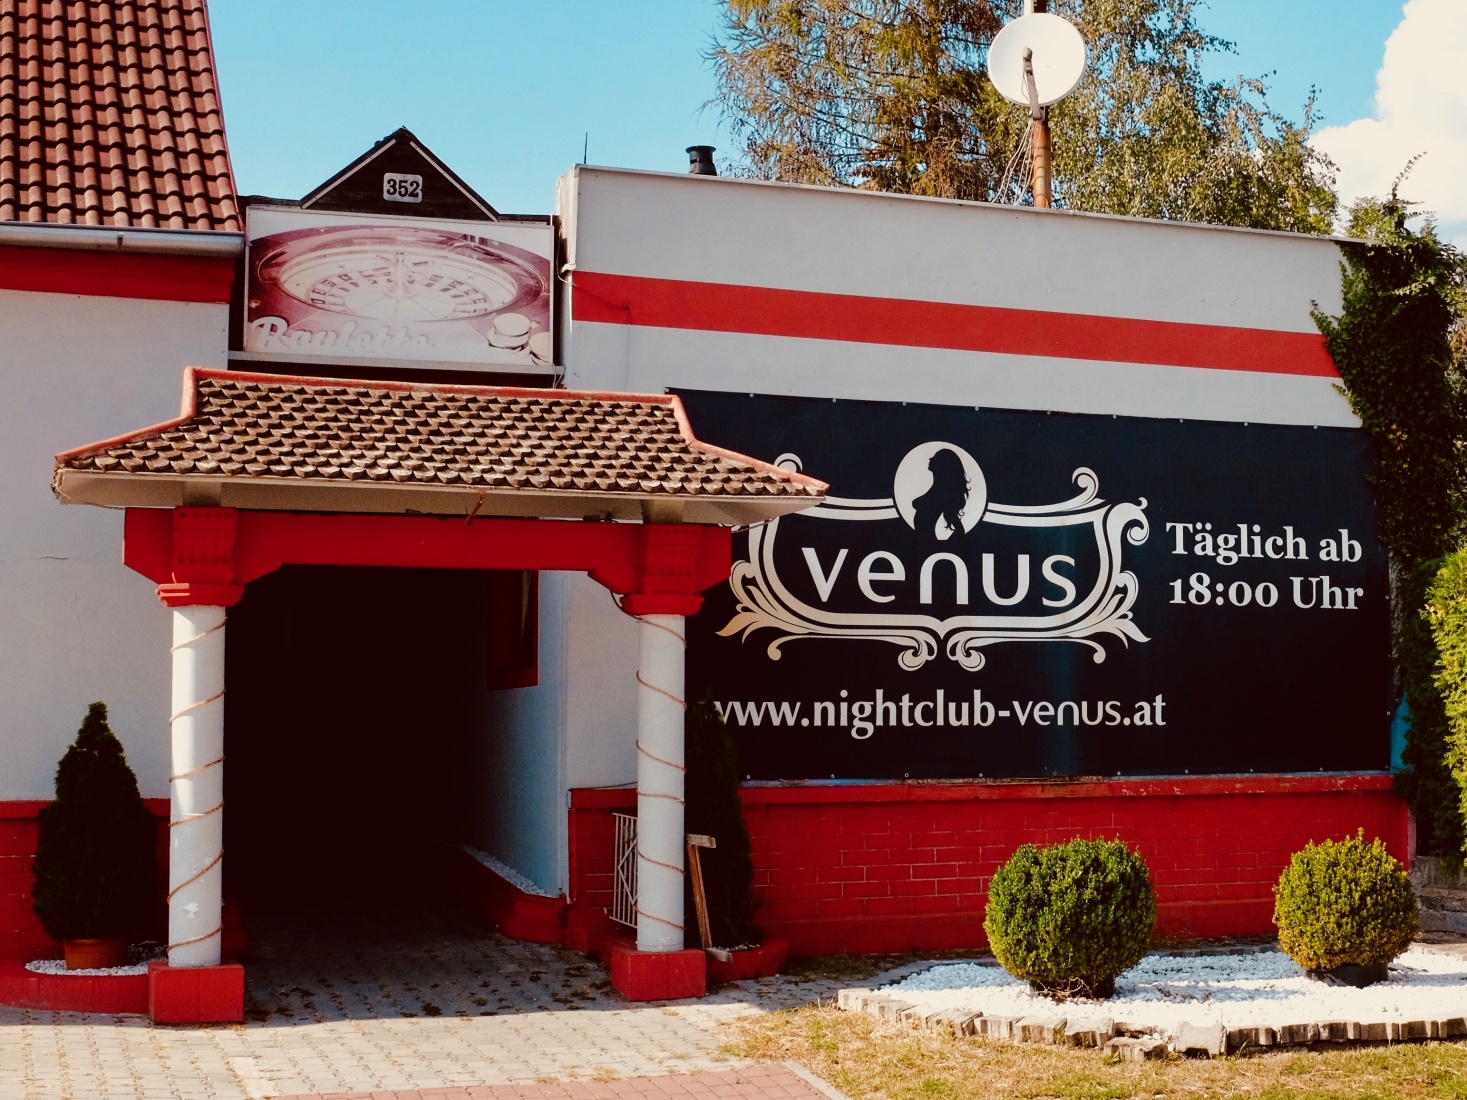 Venus night club in České Velenice, Czech Republic.